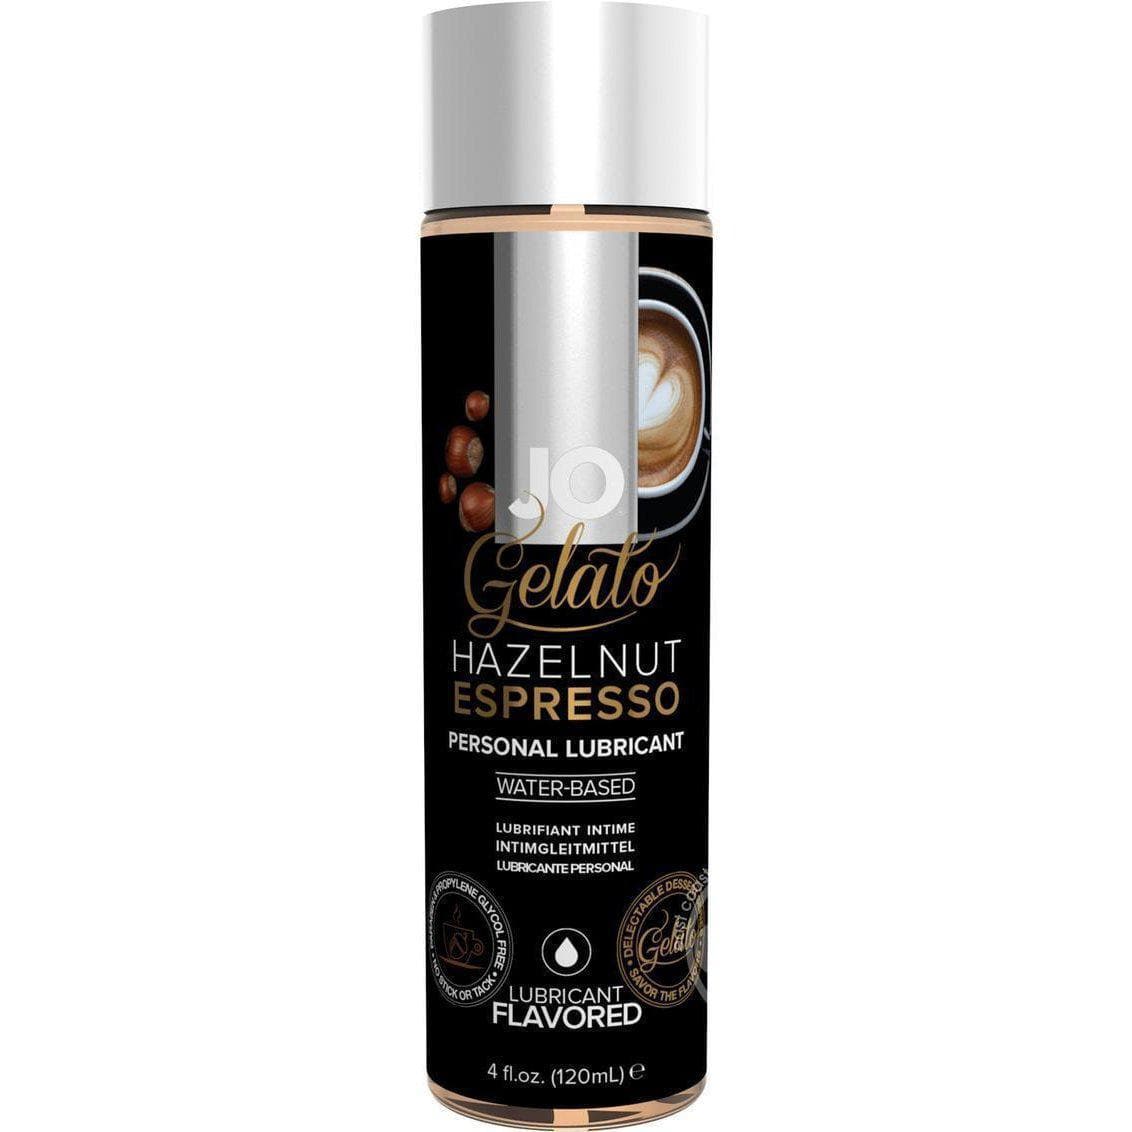 JO Gelato Water Based Personal Flavored Lubricant Hazelnut Espresso - Romantic Blessings